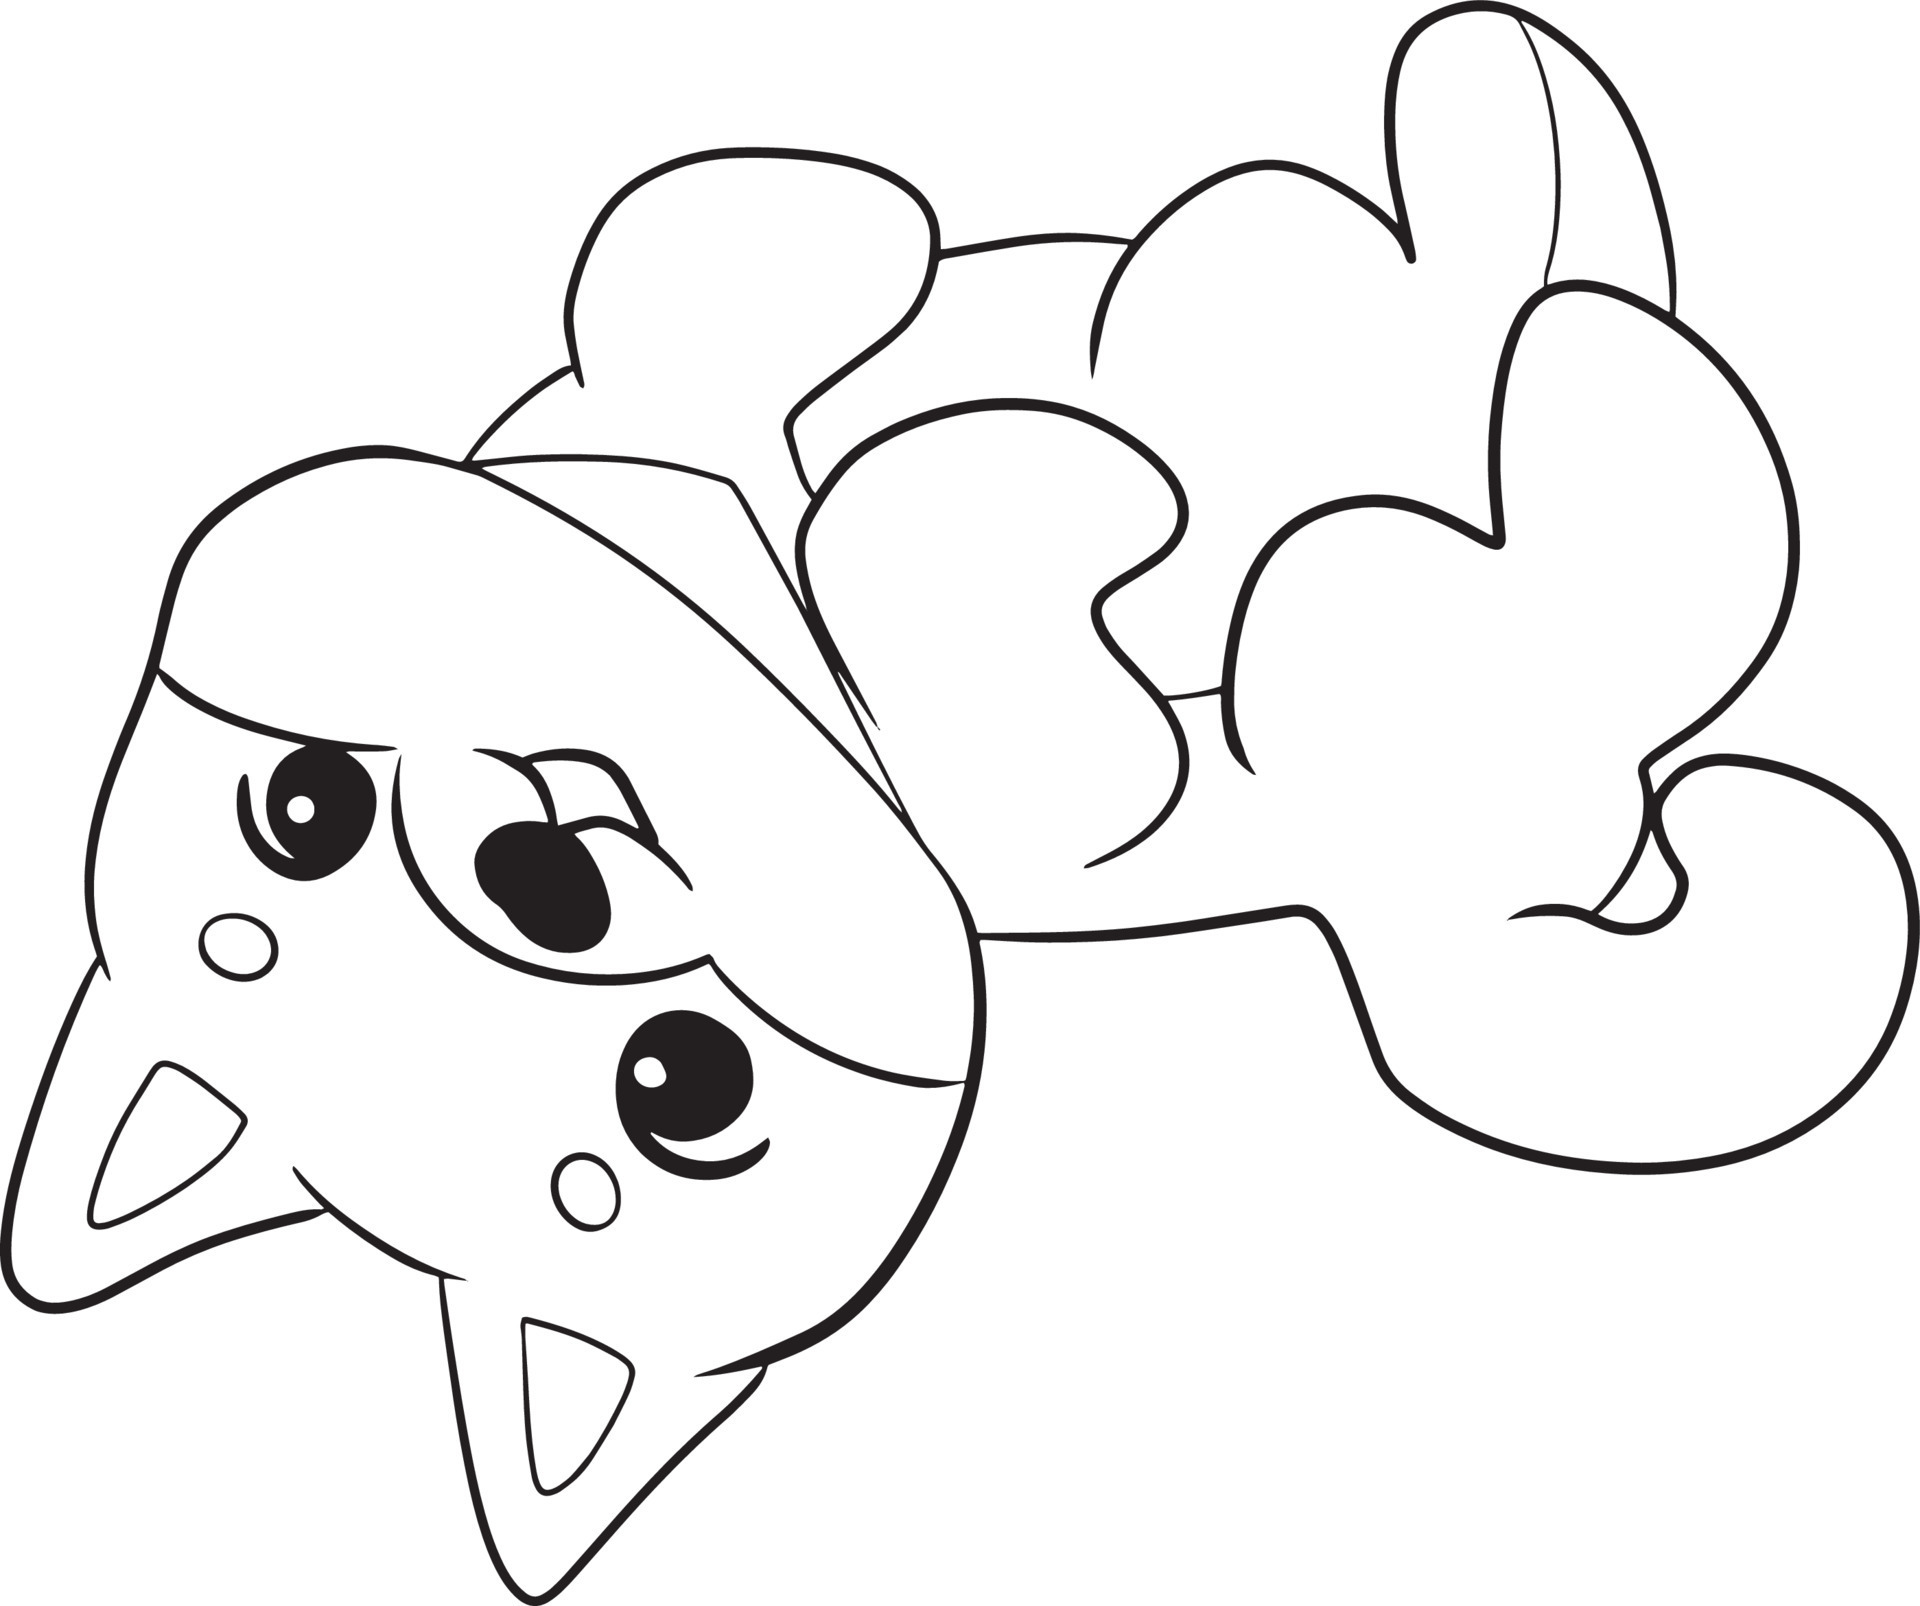 Dog Animal cartoon doodle kawaii anime coloring page cute ...